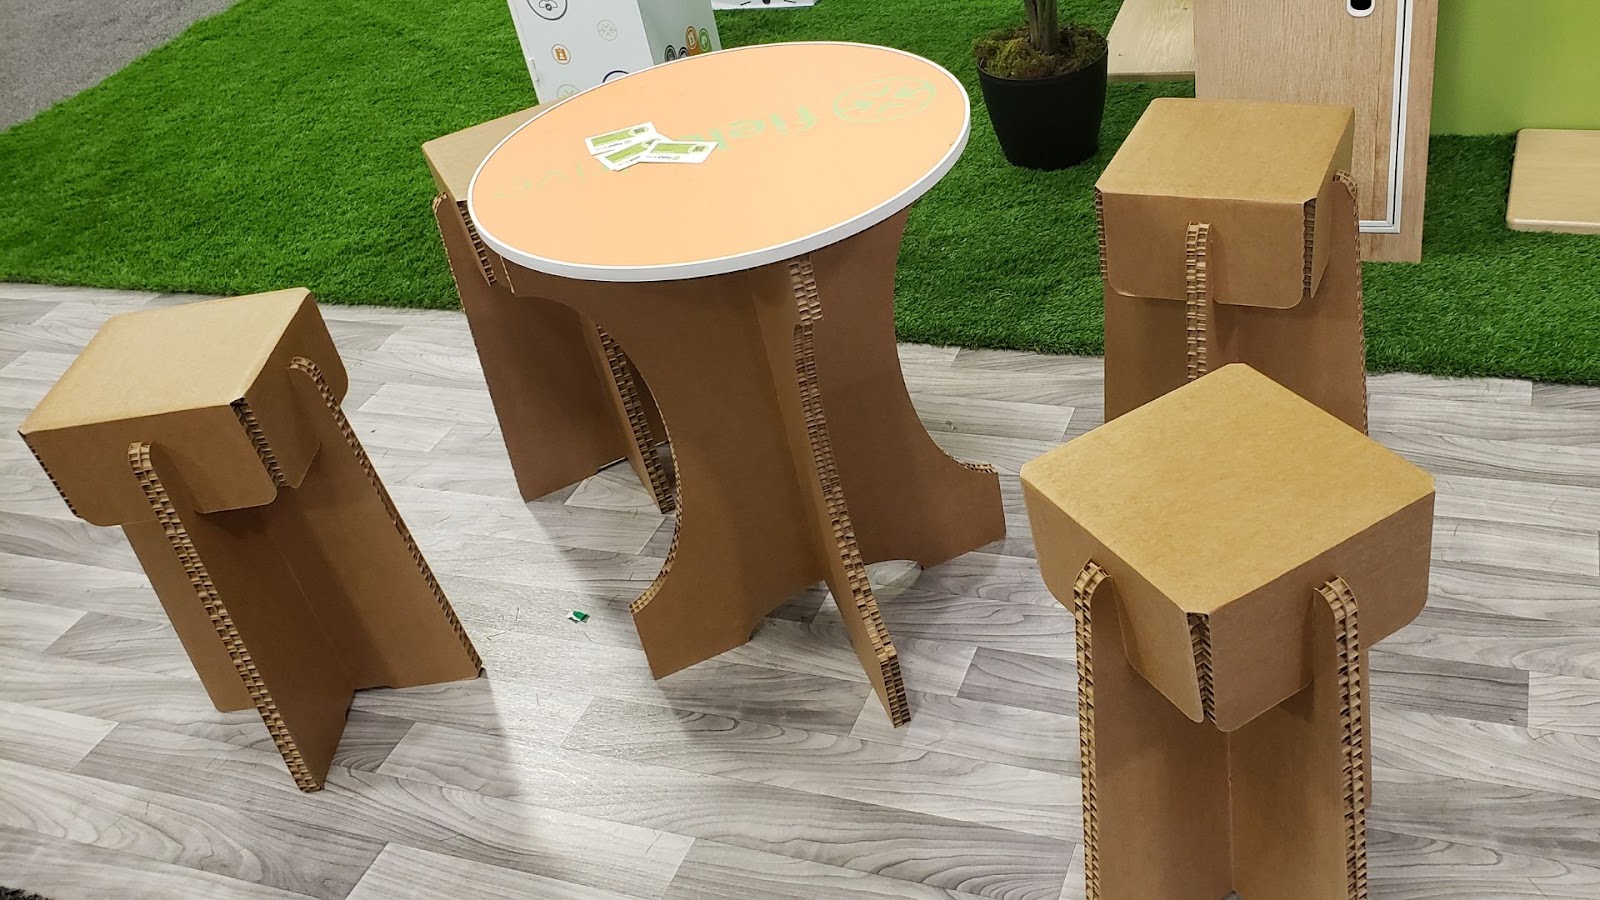 Cardborad table and chairs